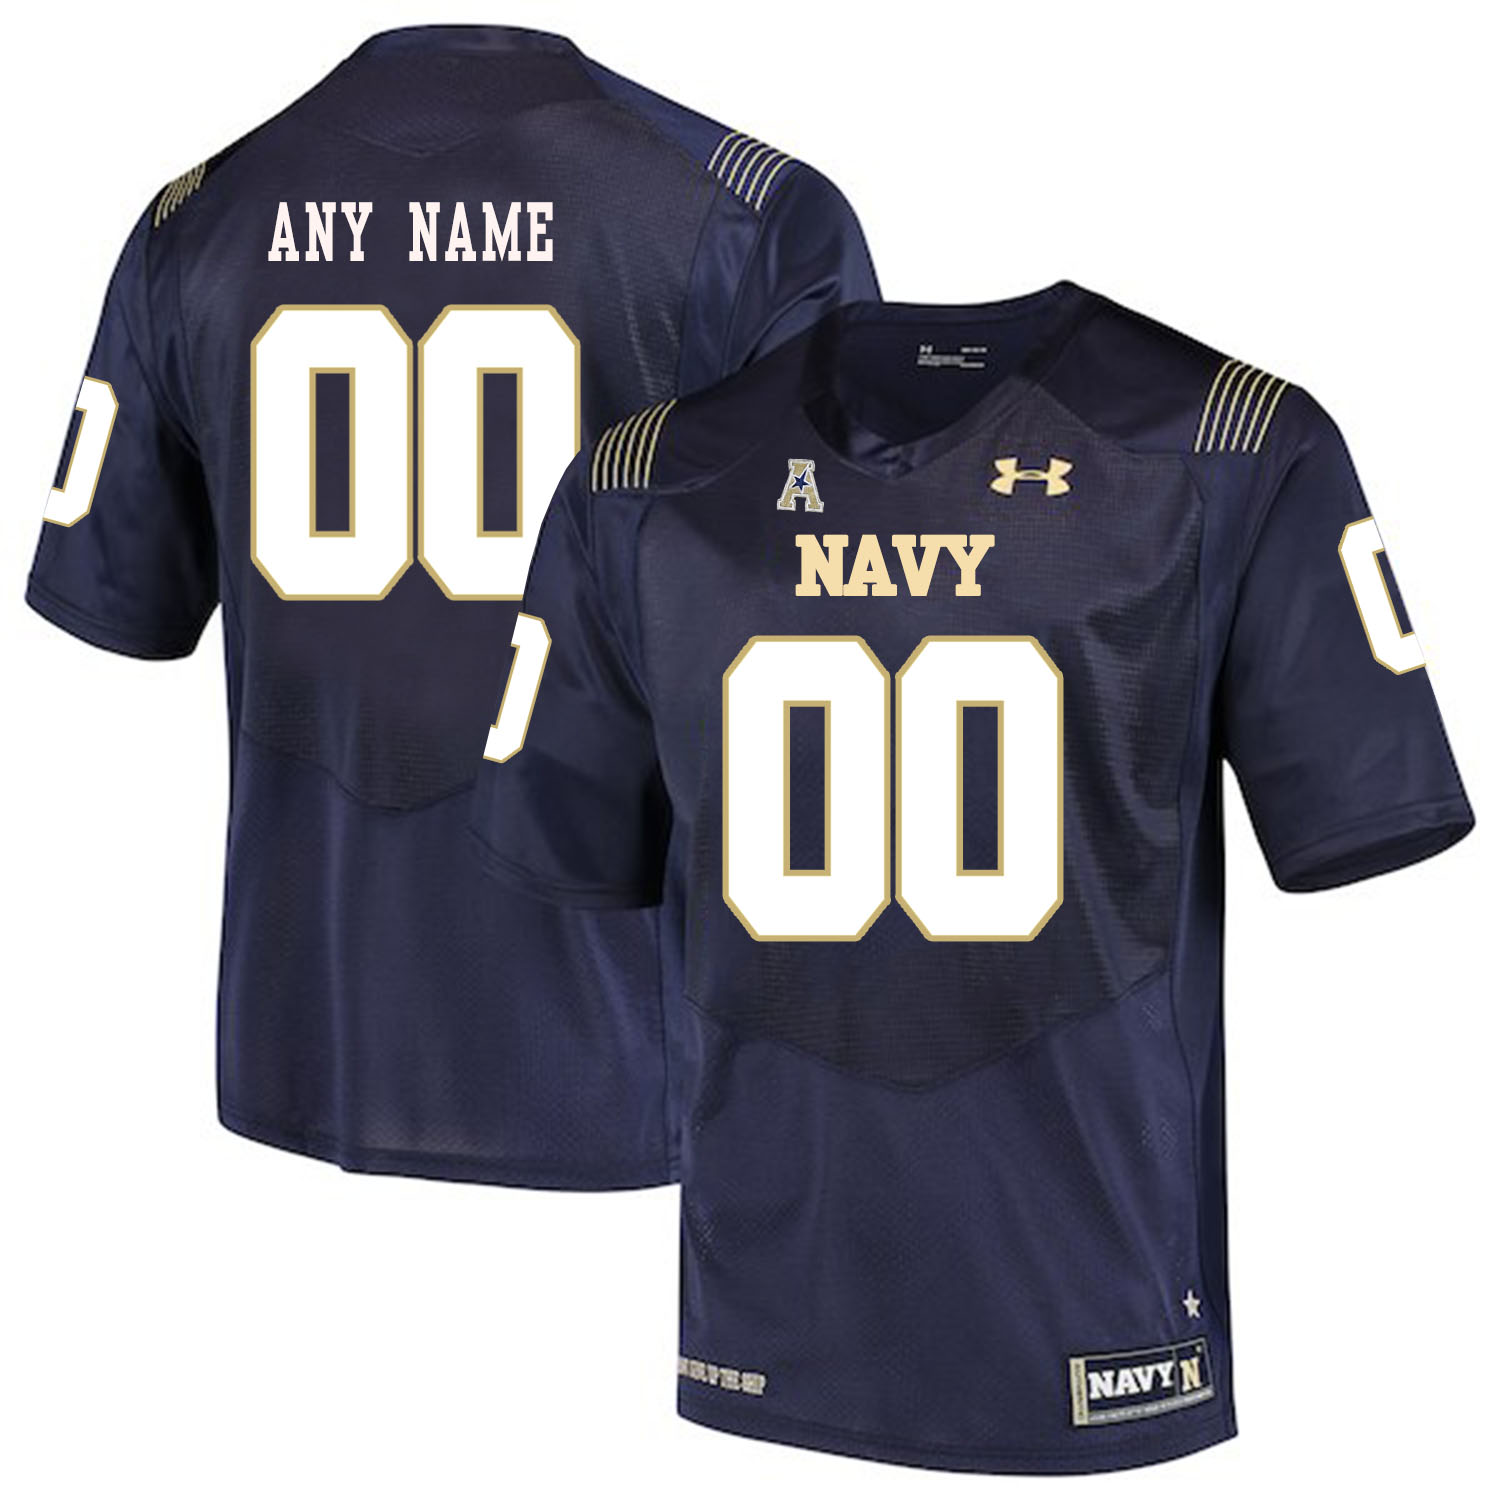 Navy Midshipmen Navy Men's Customized College Football Jersey